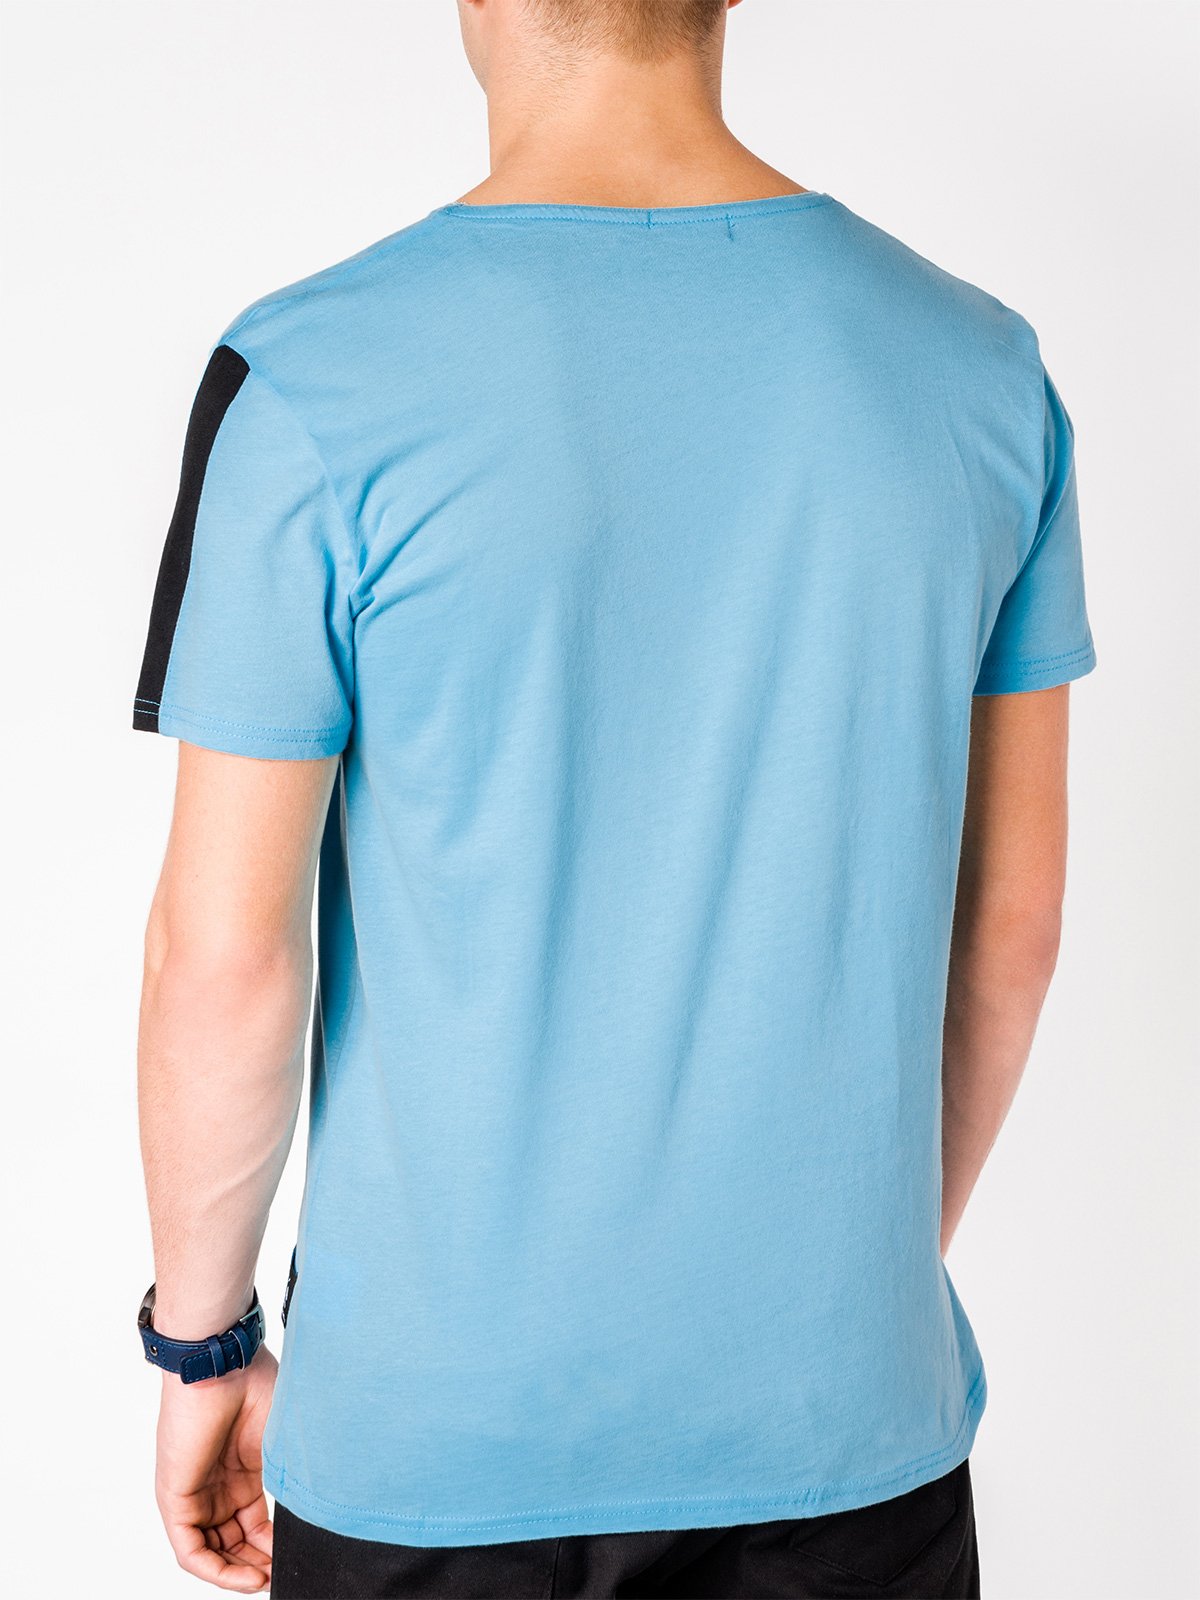 Men's printed t-shirt S925 - light blue | MODONE wholesale - Clothing ...